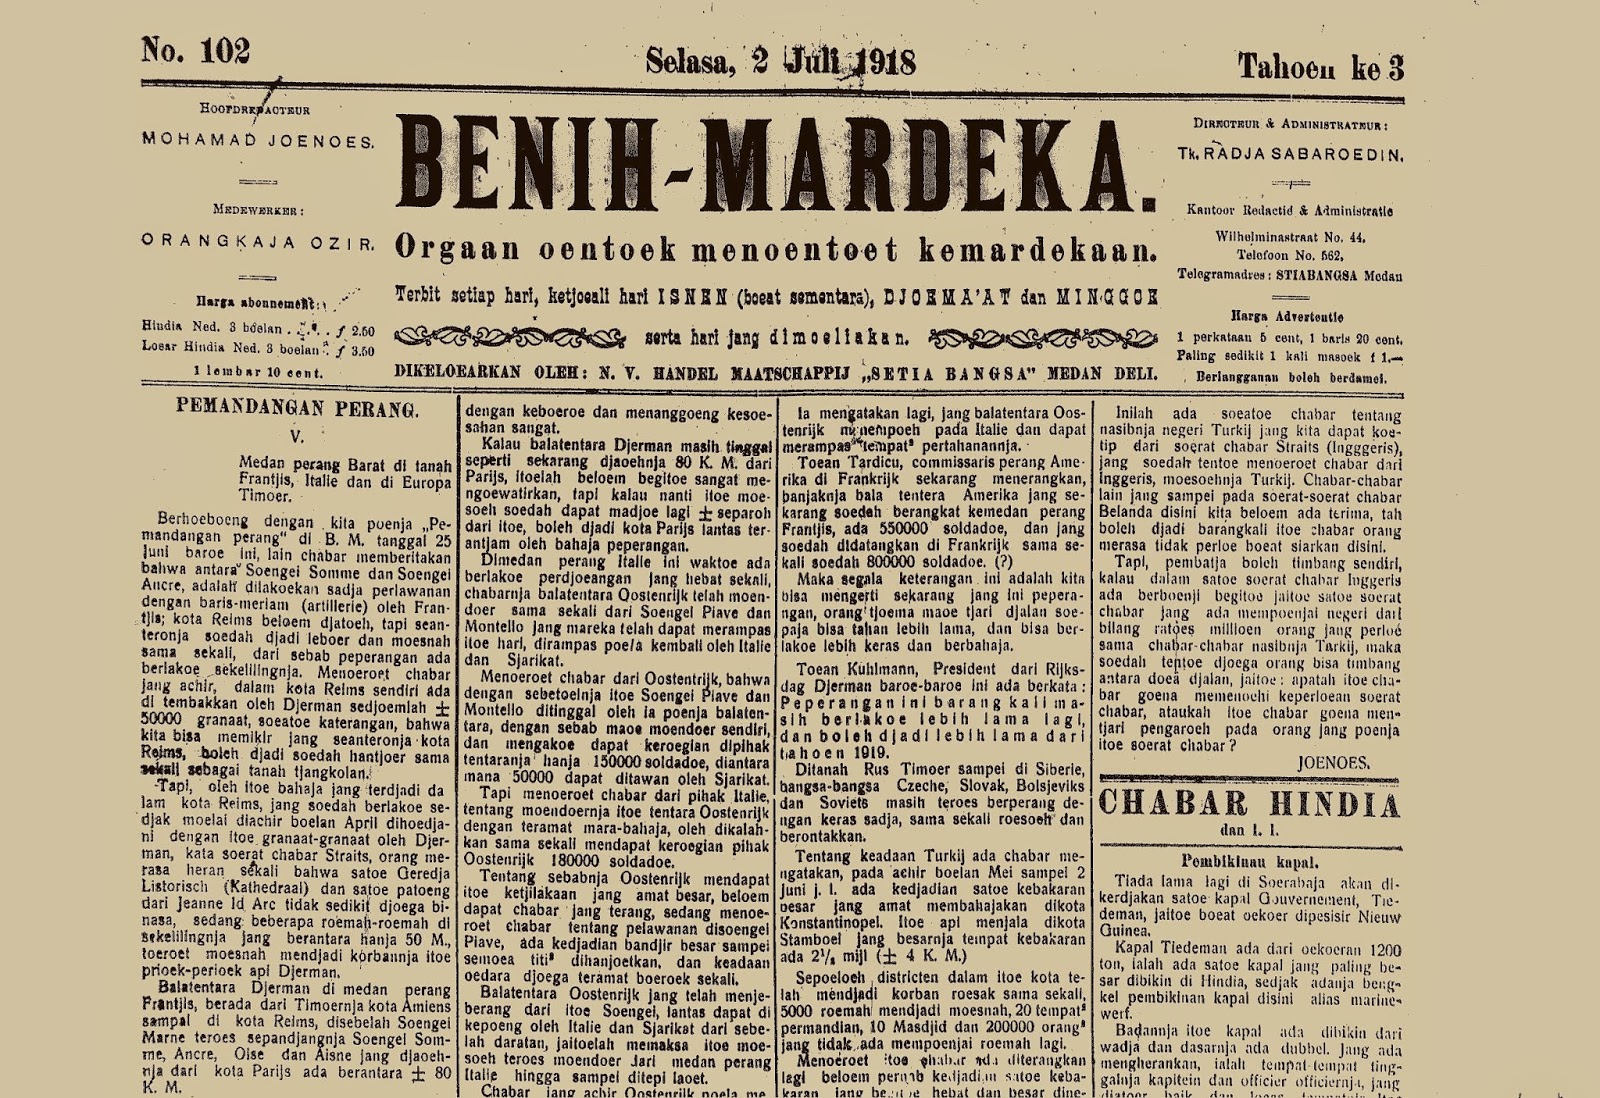 Sejarah Pers: Kata "Merdeka" Pertama Terbit di Medan dalam Surat Kabar